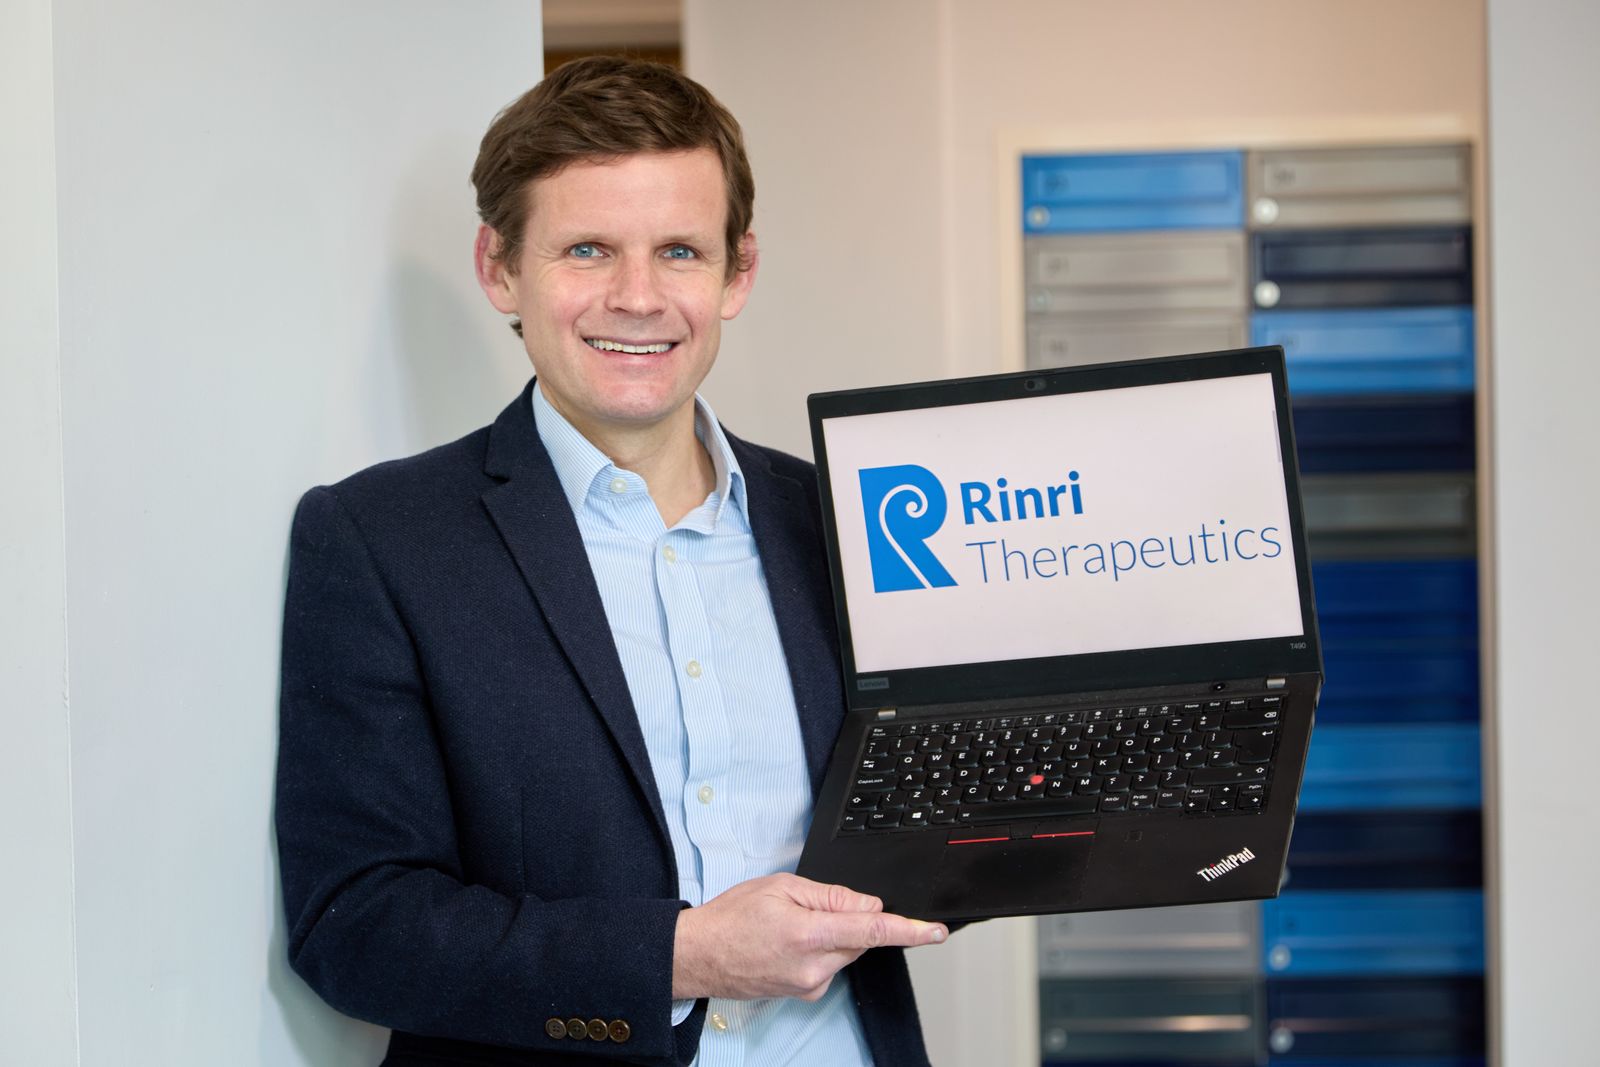 Rinri Therapeutics occupies a new site in Sheffield